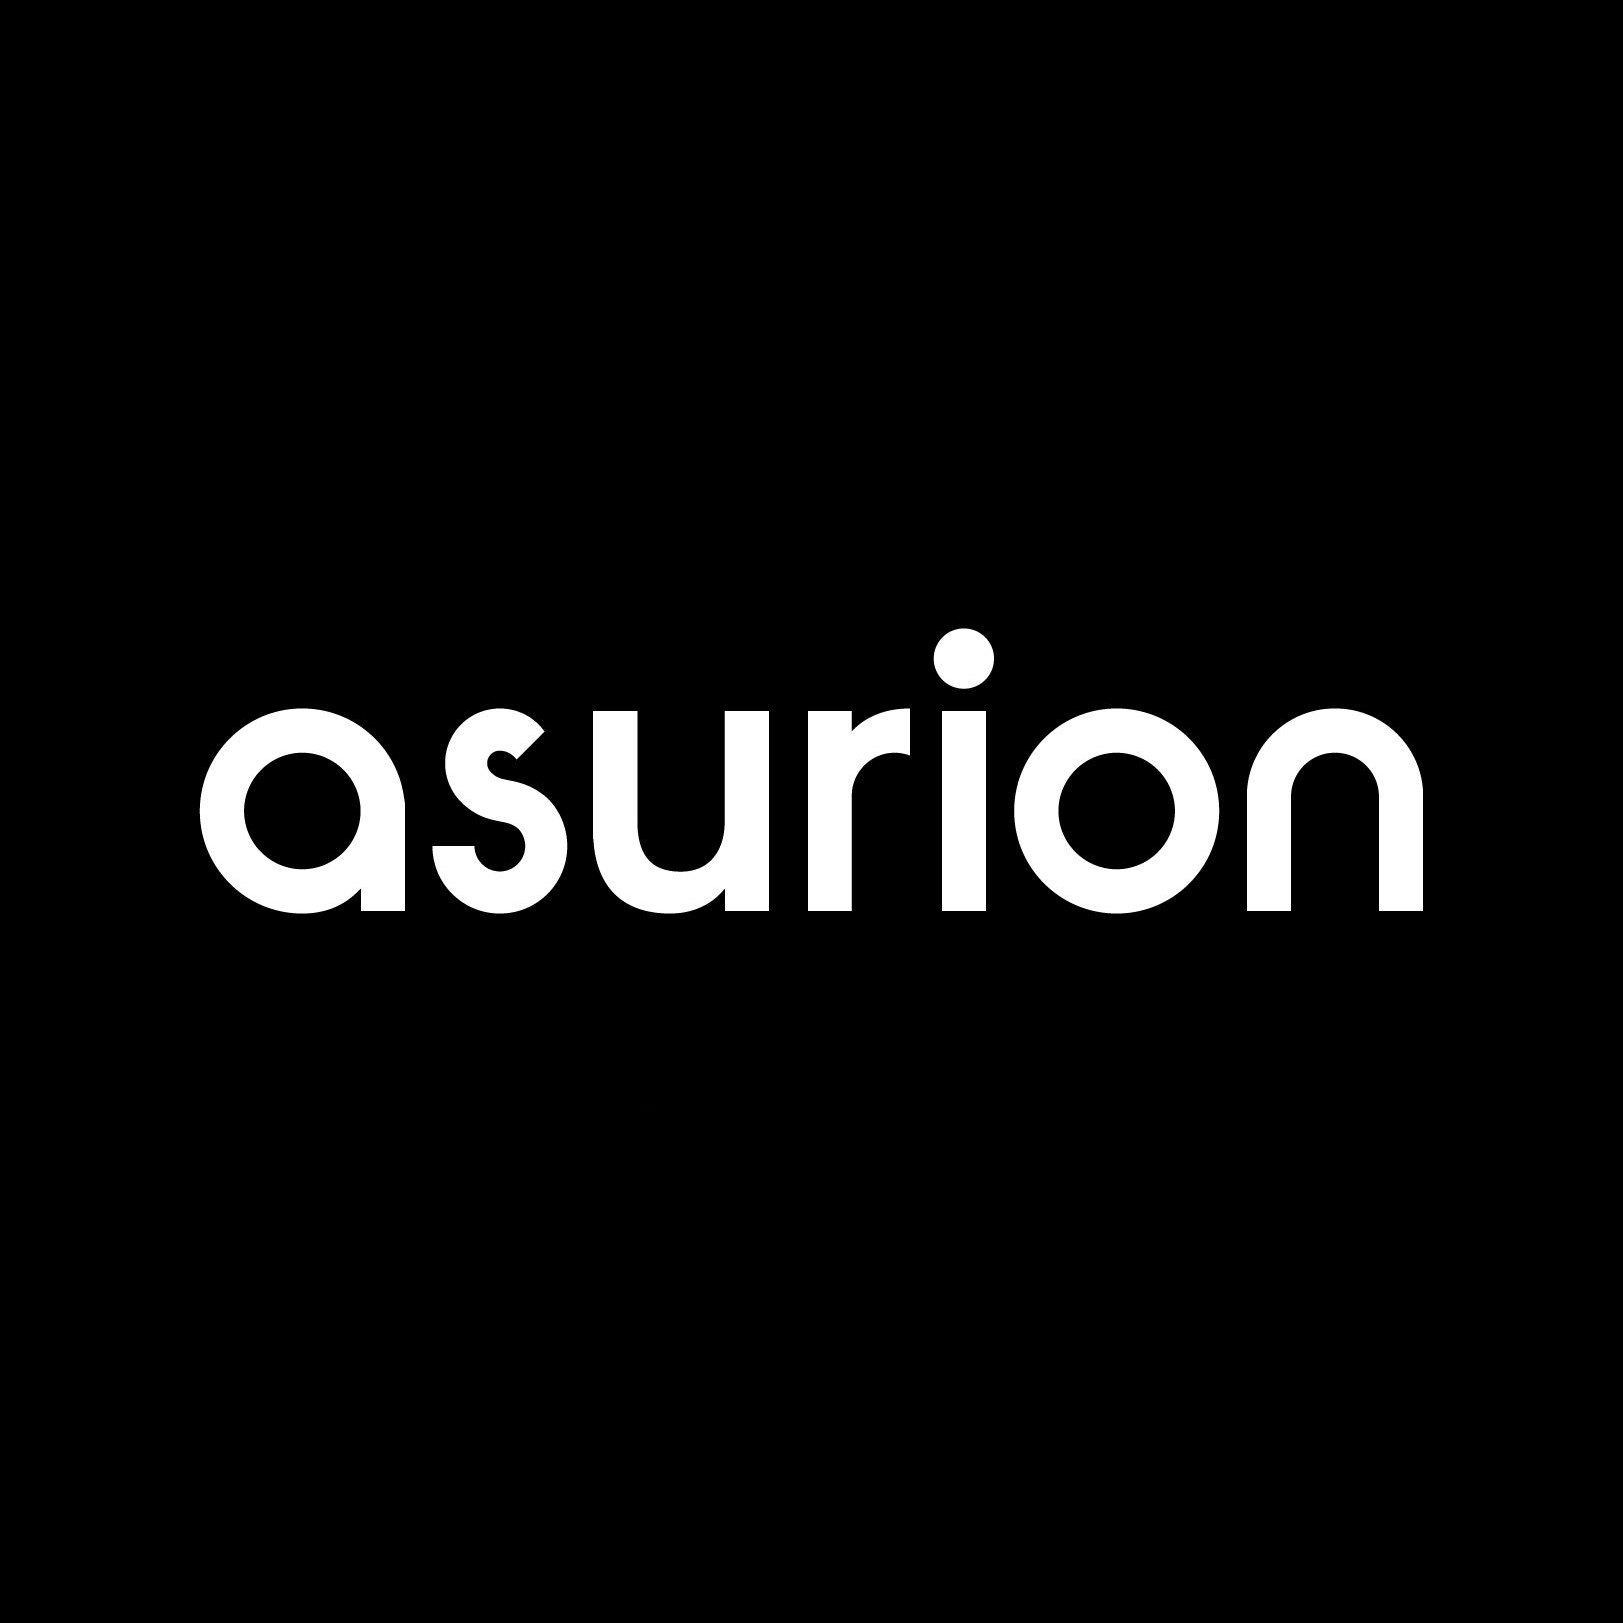 Asurion